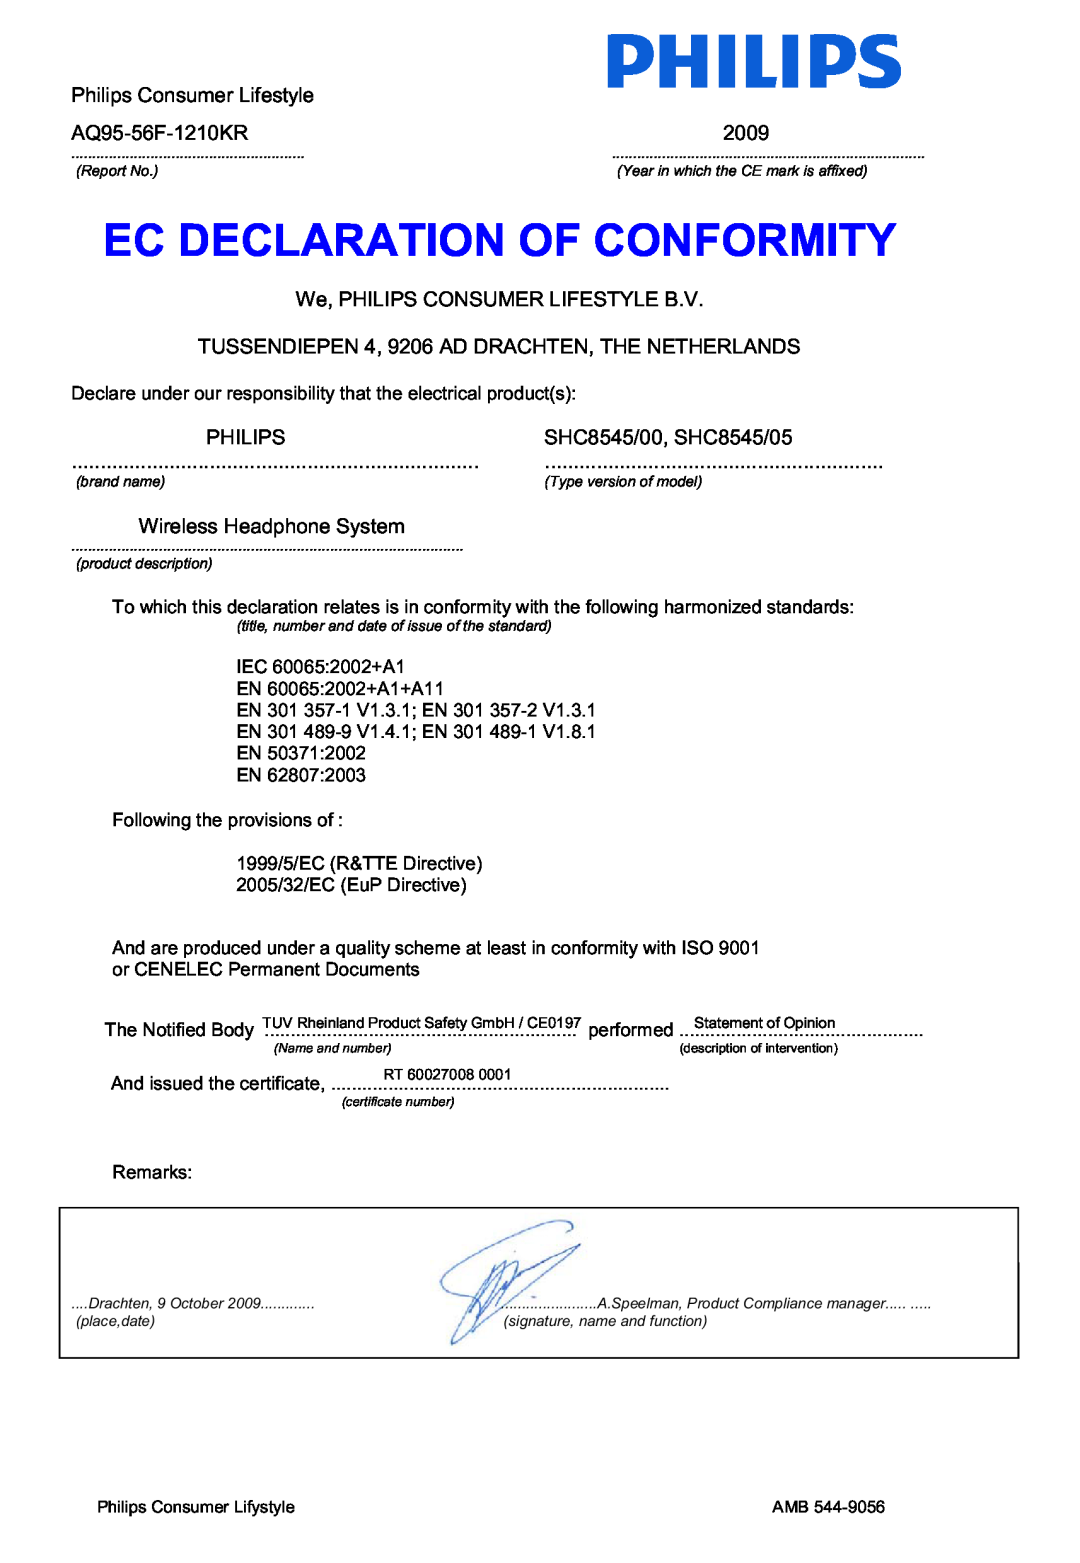 Philips manual Ec Declaration Of Conformity, Philips Consumer Lifestyle, AQ95-56F-1210KR, 2009, SHC8545/00, SHC8545/05 